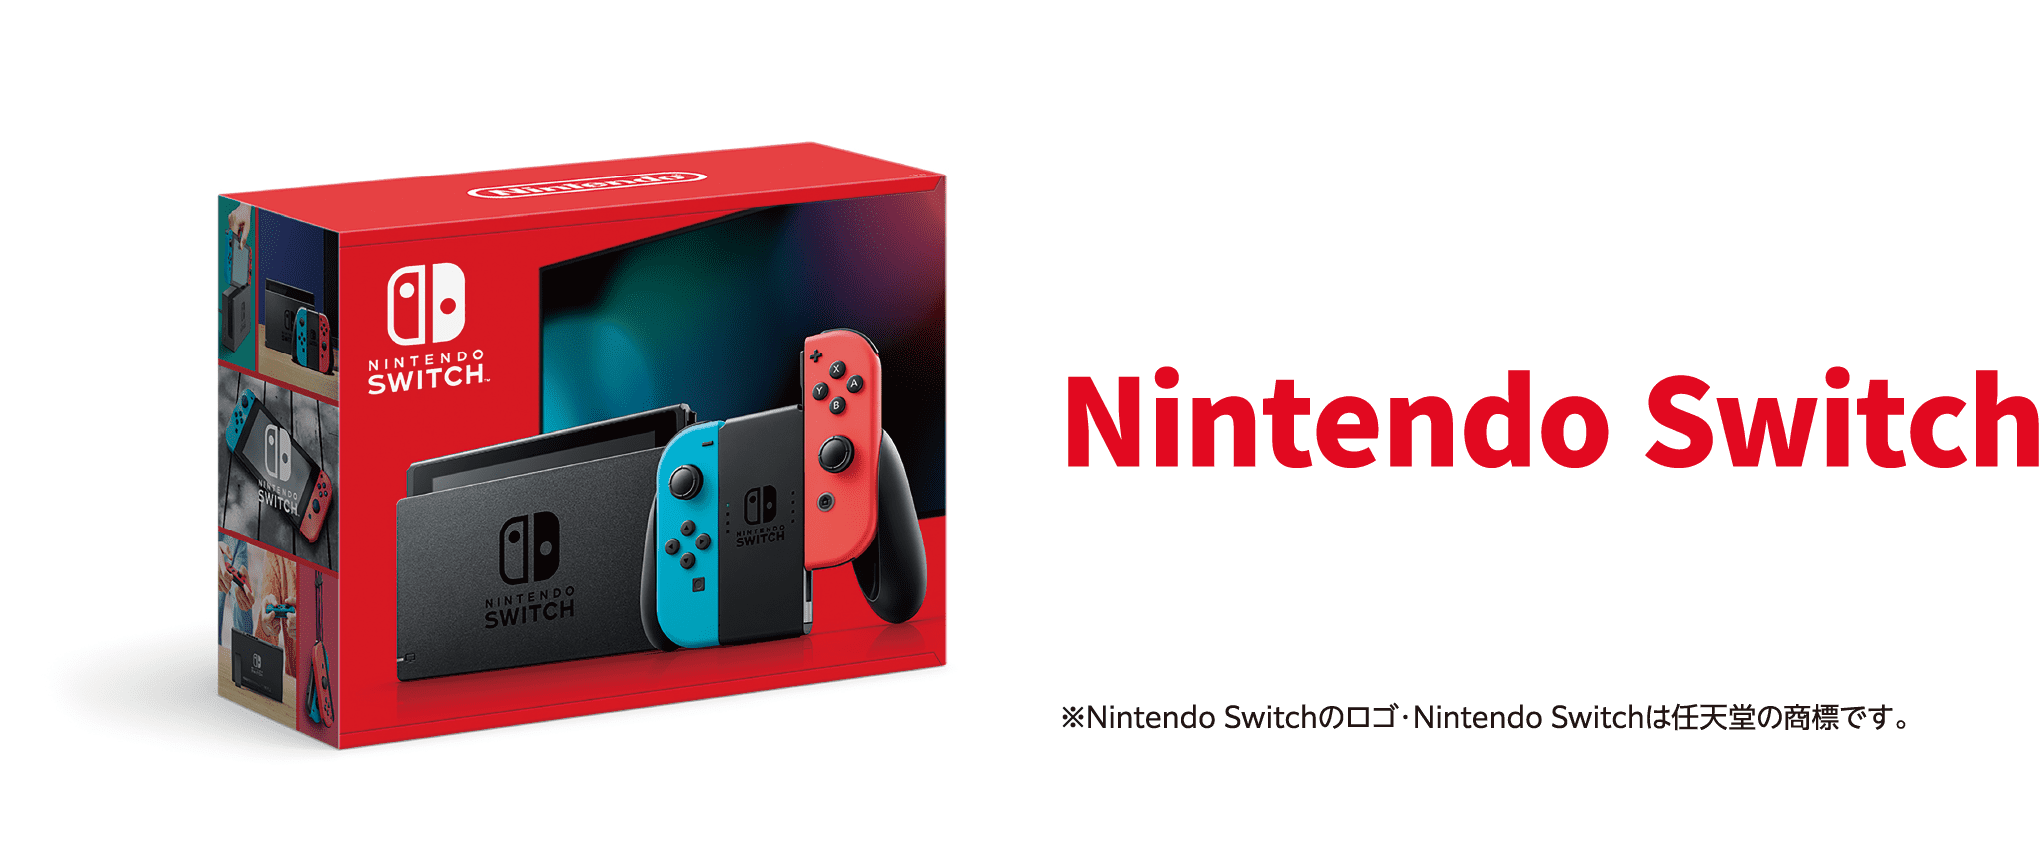 Nintendo Switch ※Nintendo Switchのロゴ・Nintendo Switchは任天堂の商標です。